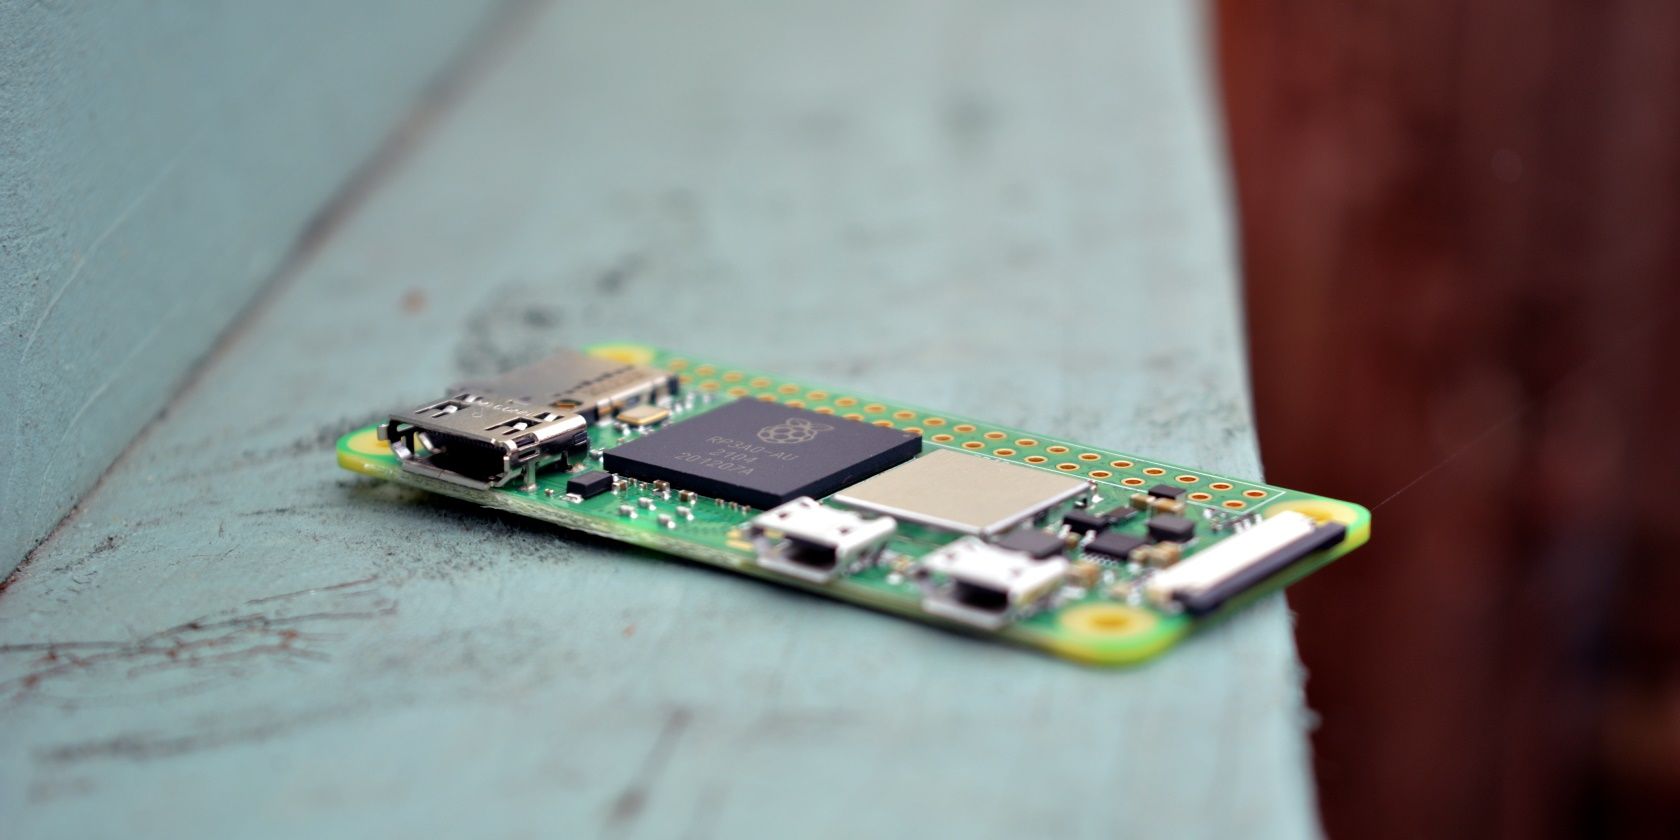 Raspberry Pi Zero: Review & Setup 